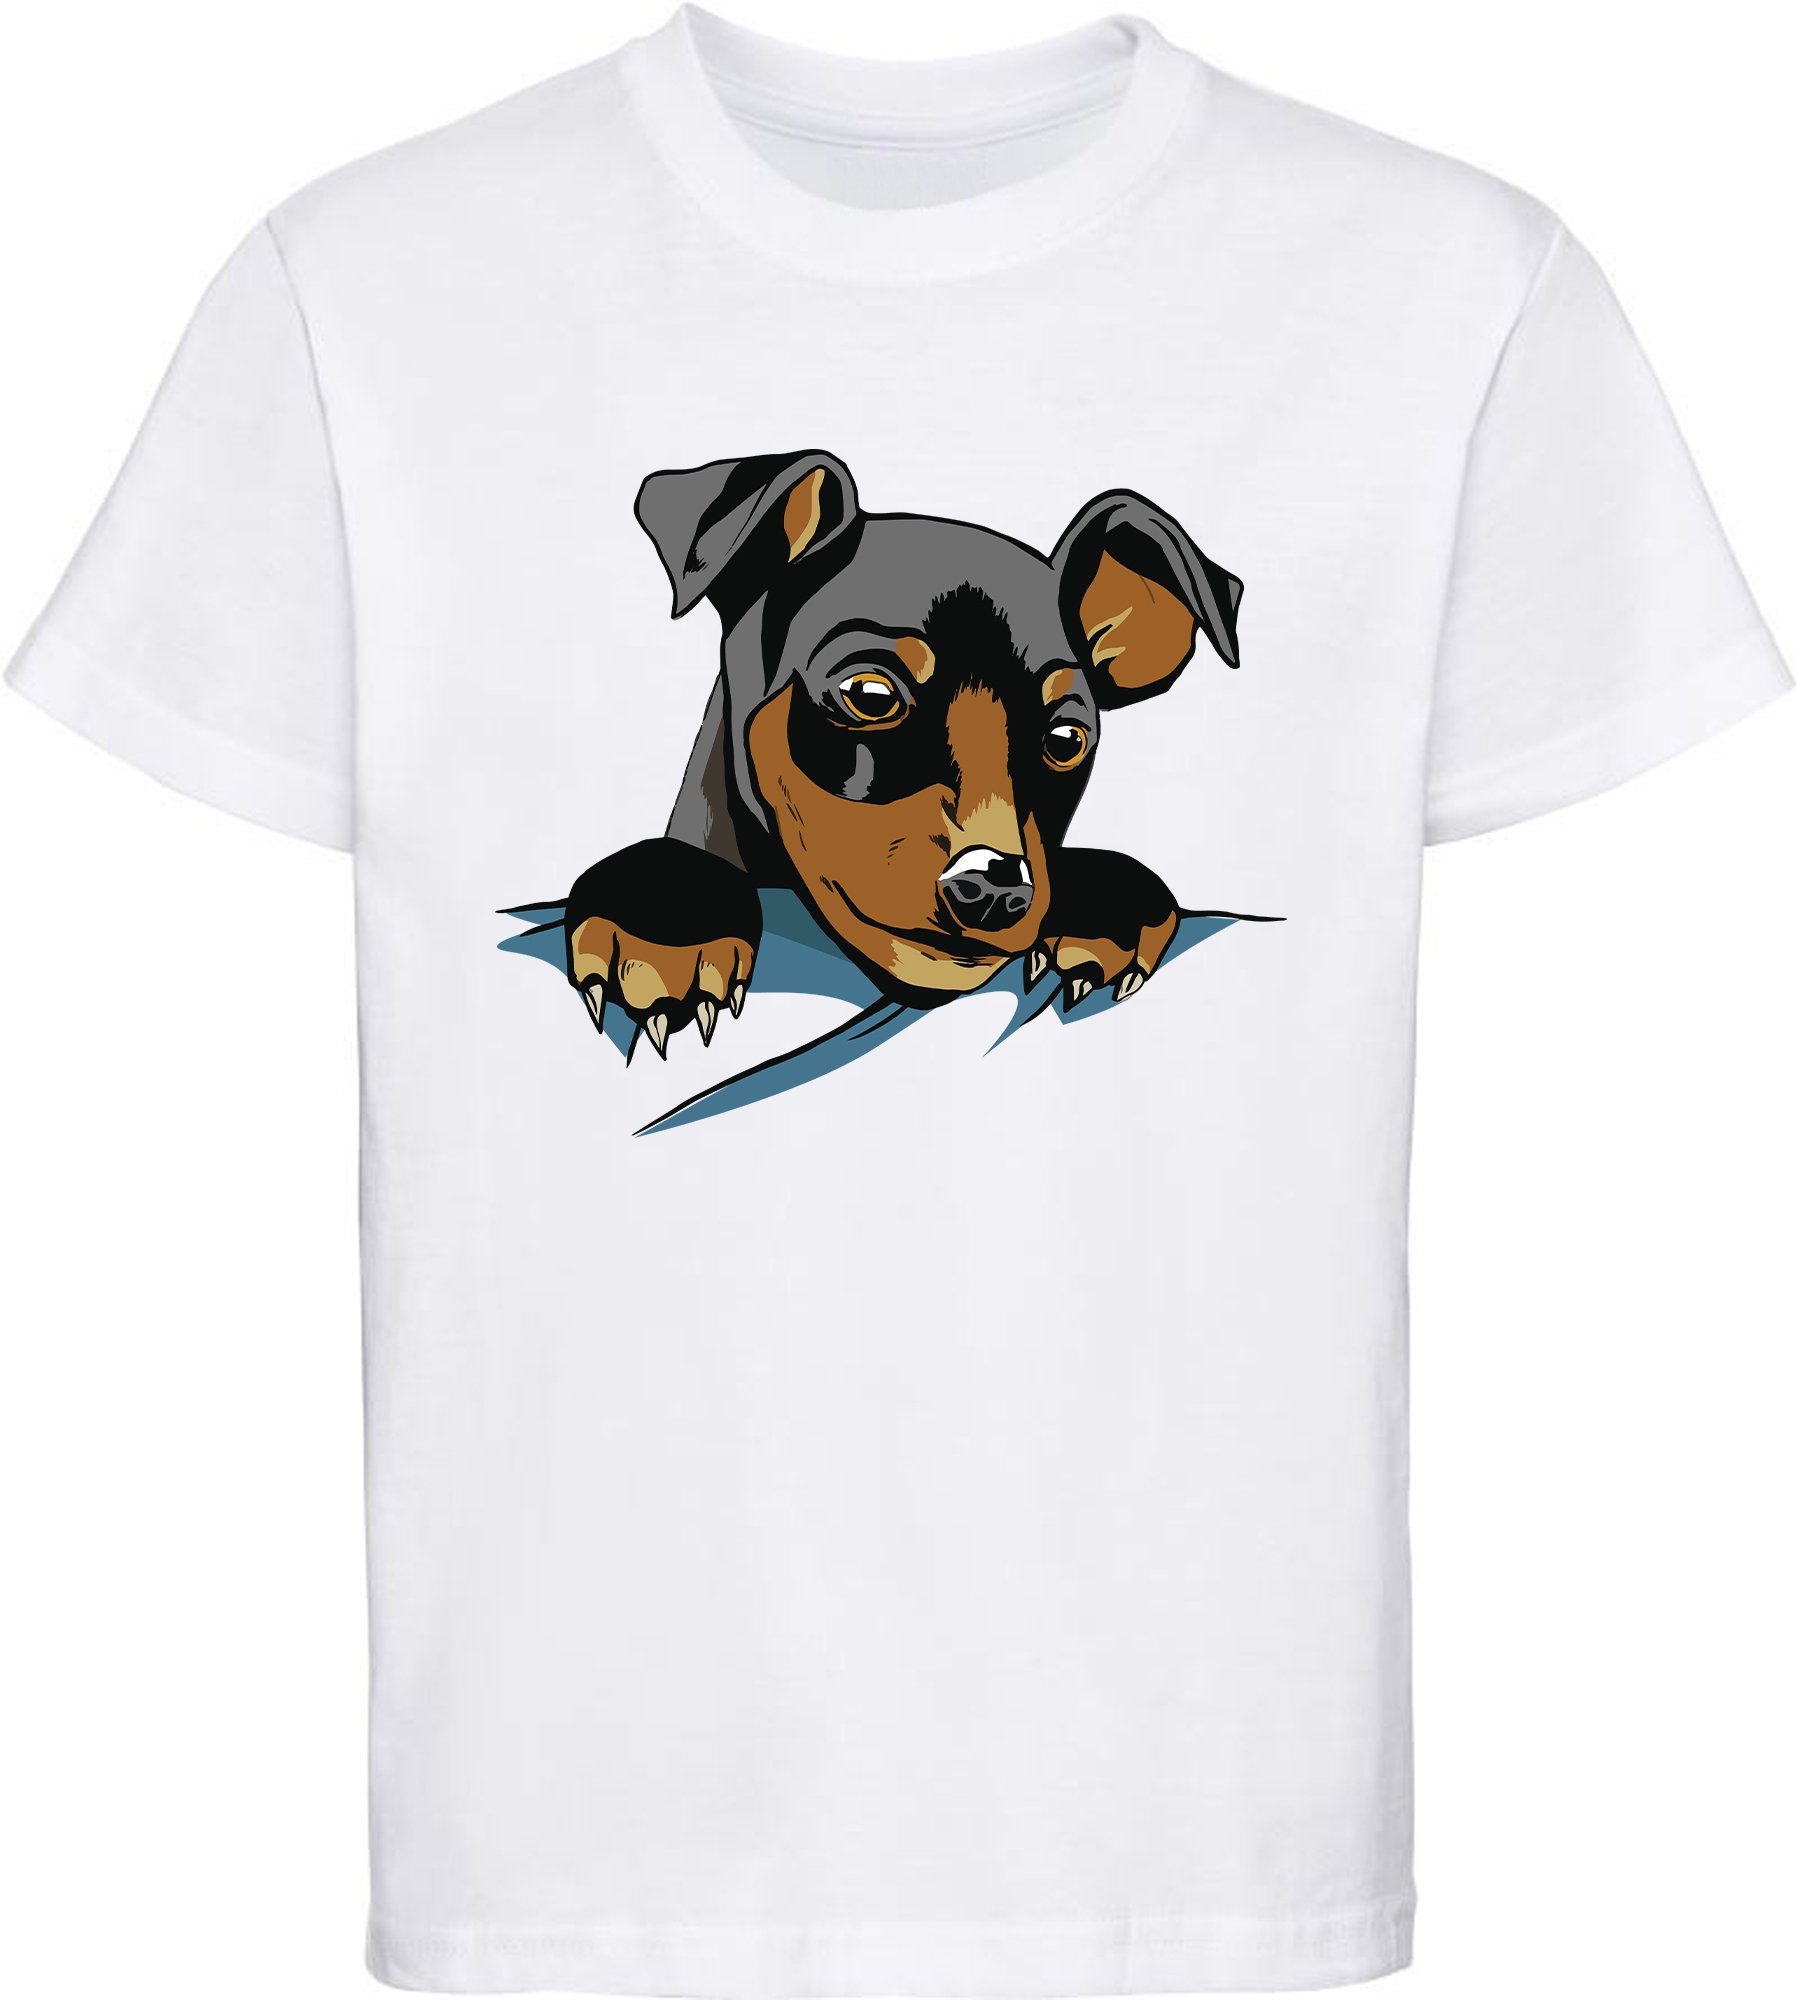 Print-Shirt Welpe bedrucktes MyDesign24 Süßer mit weiss Hunde - T-Shirt Aufdruck, i227 Baumwollshirt Kinder